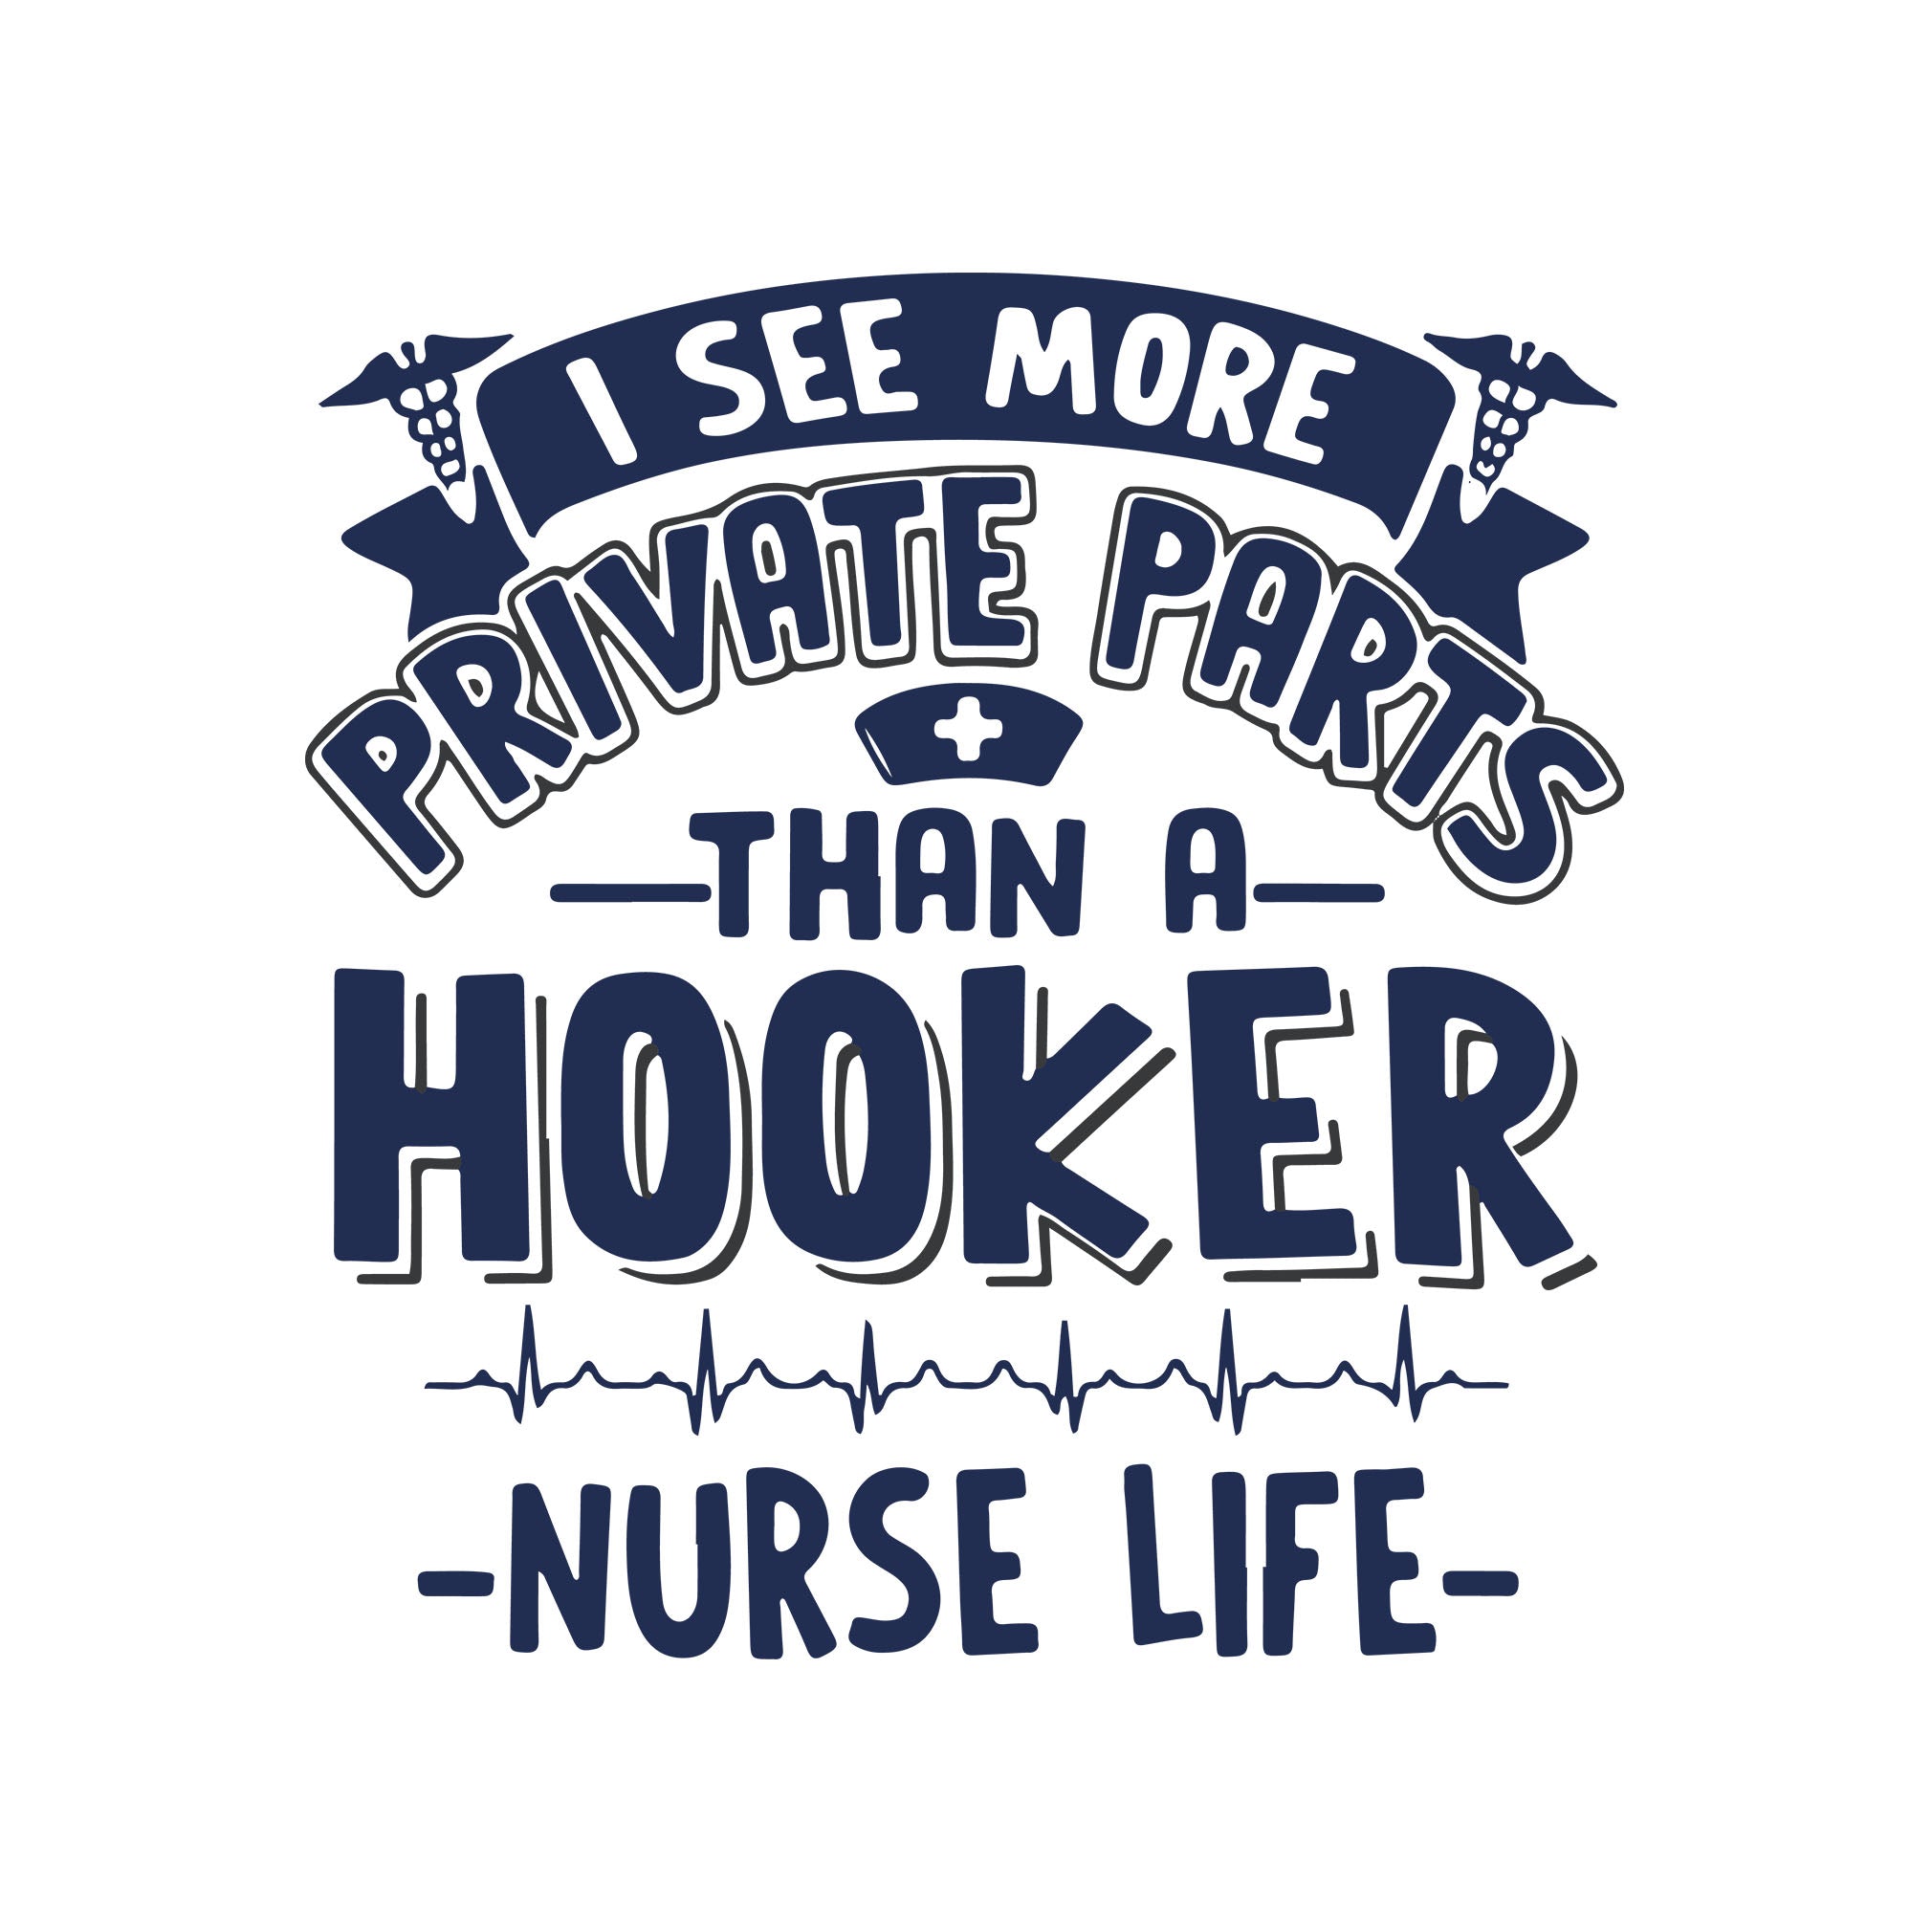 Download I See More Private Parts Than A Hooker Nurse Life Svg Dxf Eps Png Dig Svgtrending